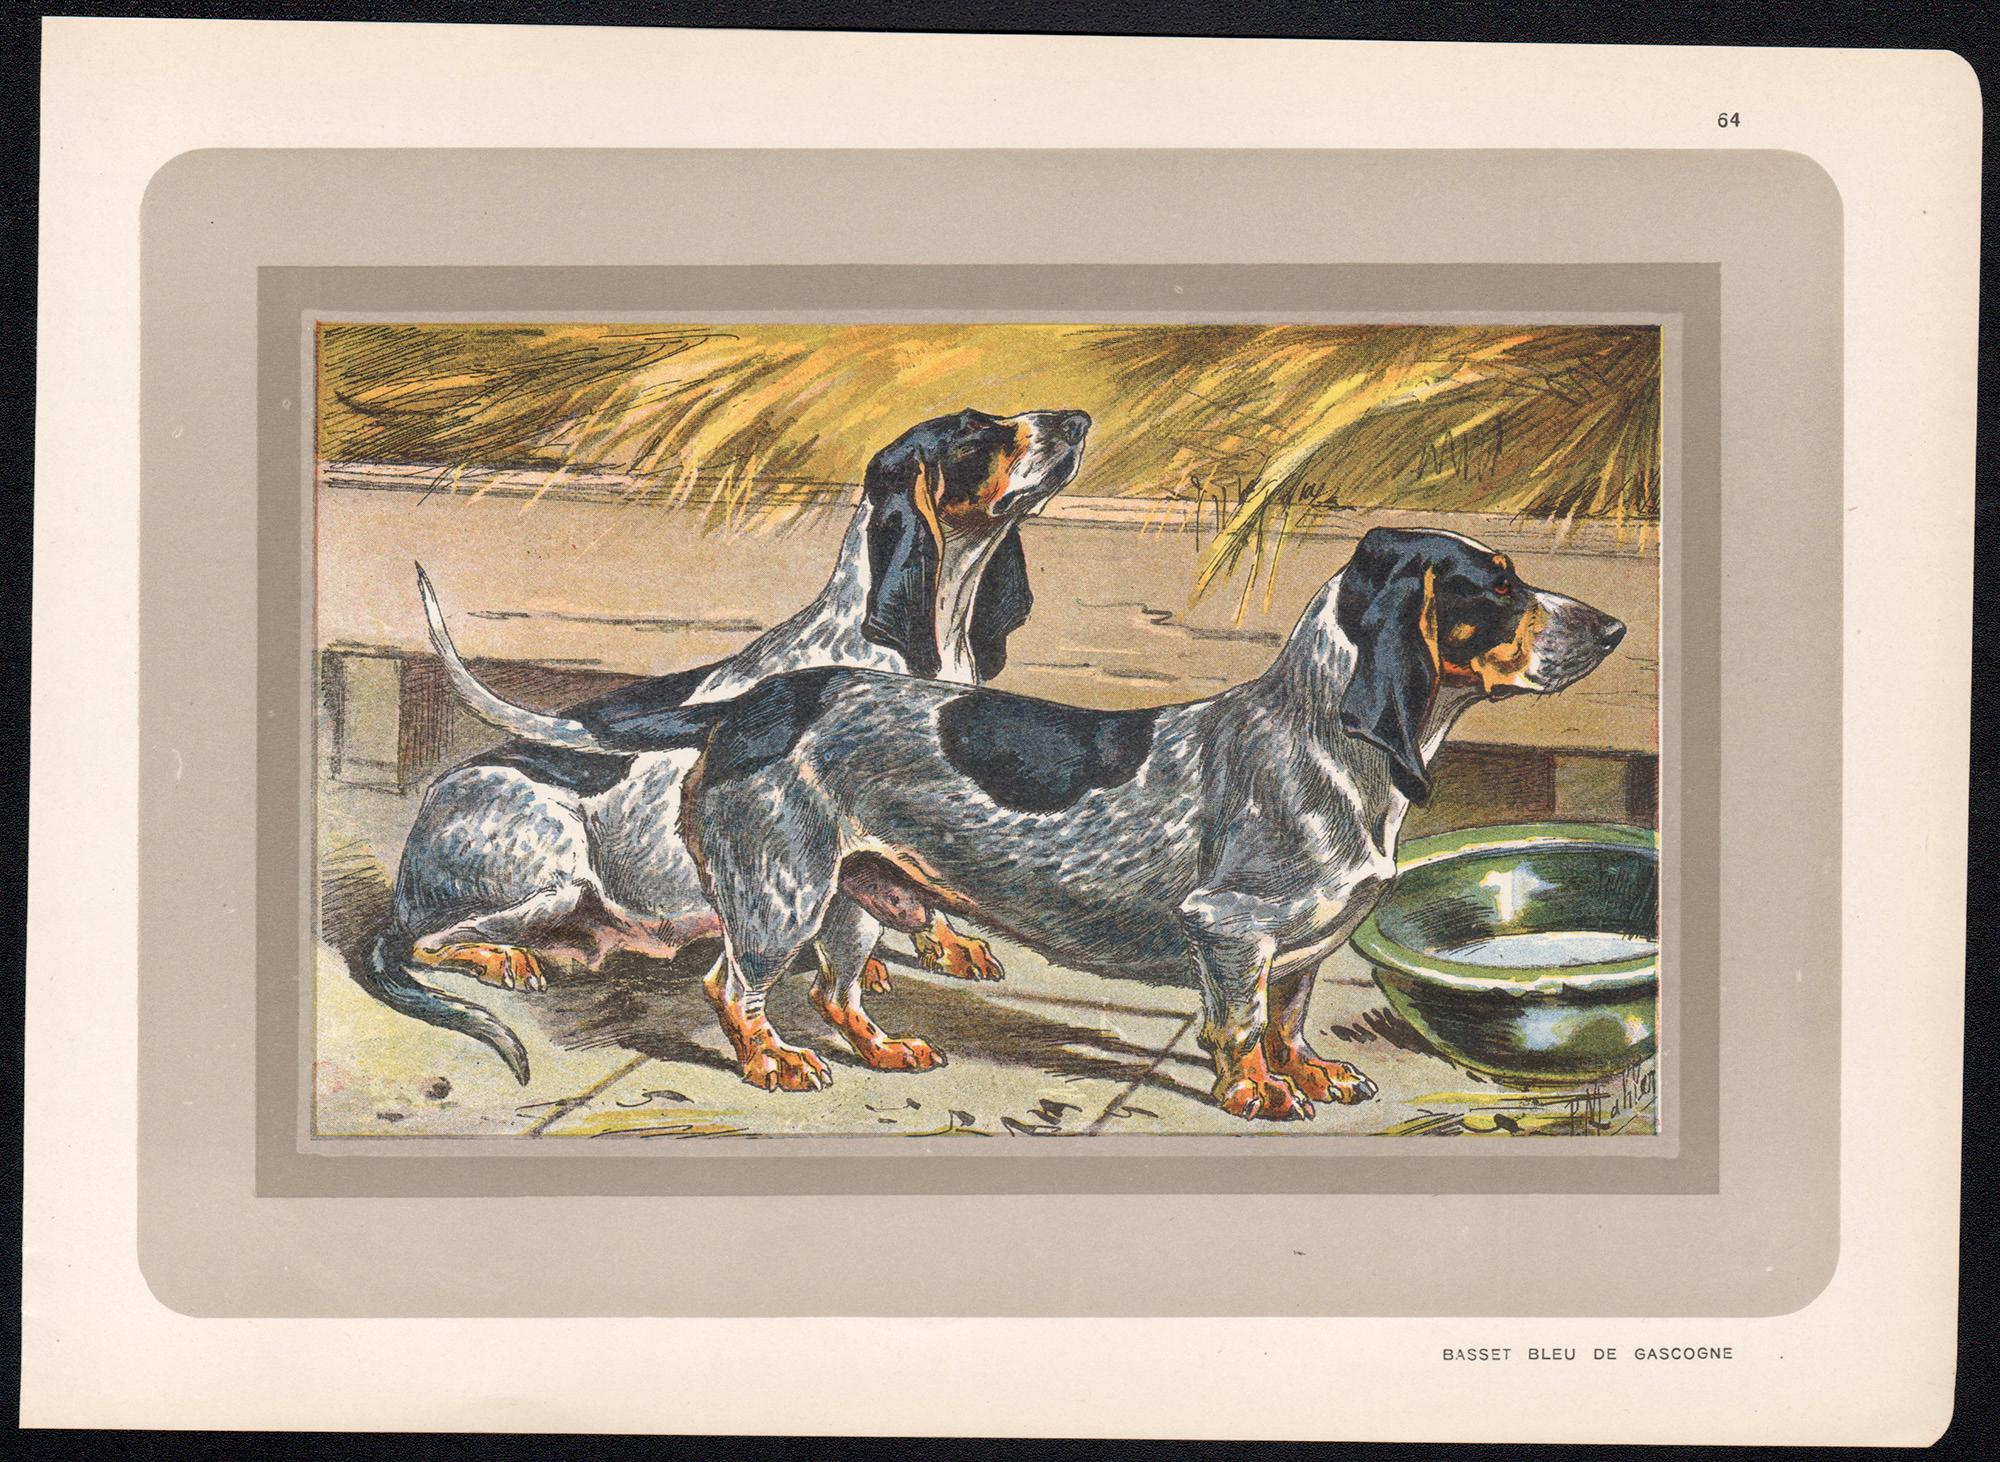 Basset Bleu de Gascogne, French hound dog chromolithograph print, 1930s - Print by P. Mahler